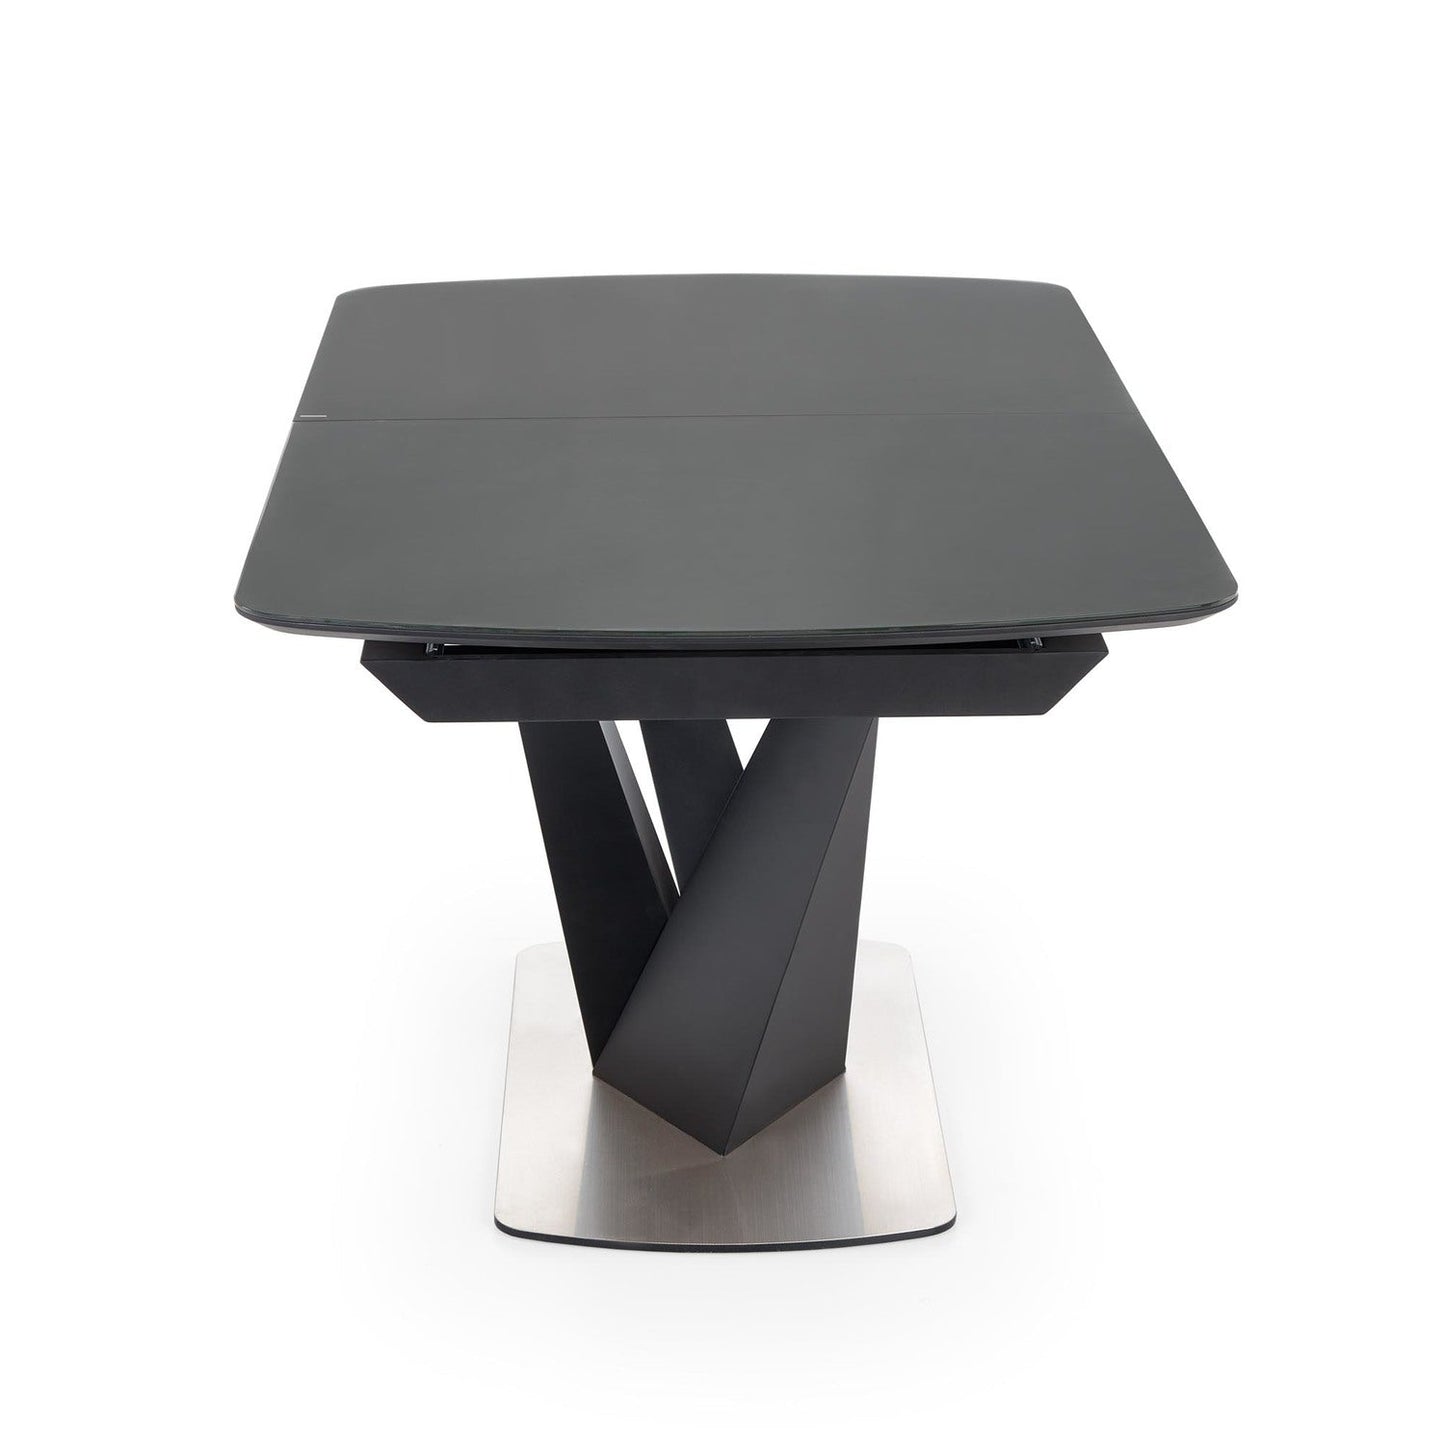 PT palīdzama galda augsme - tumši osni, kāja - melna 160-200/90/77 cm